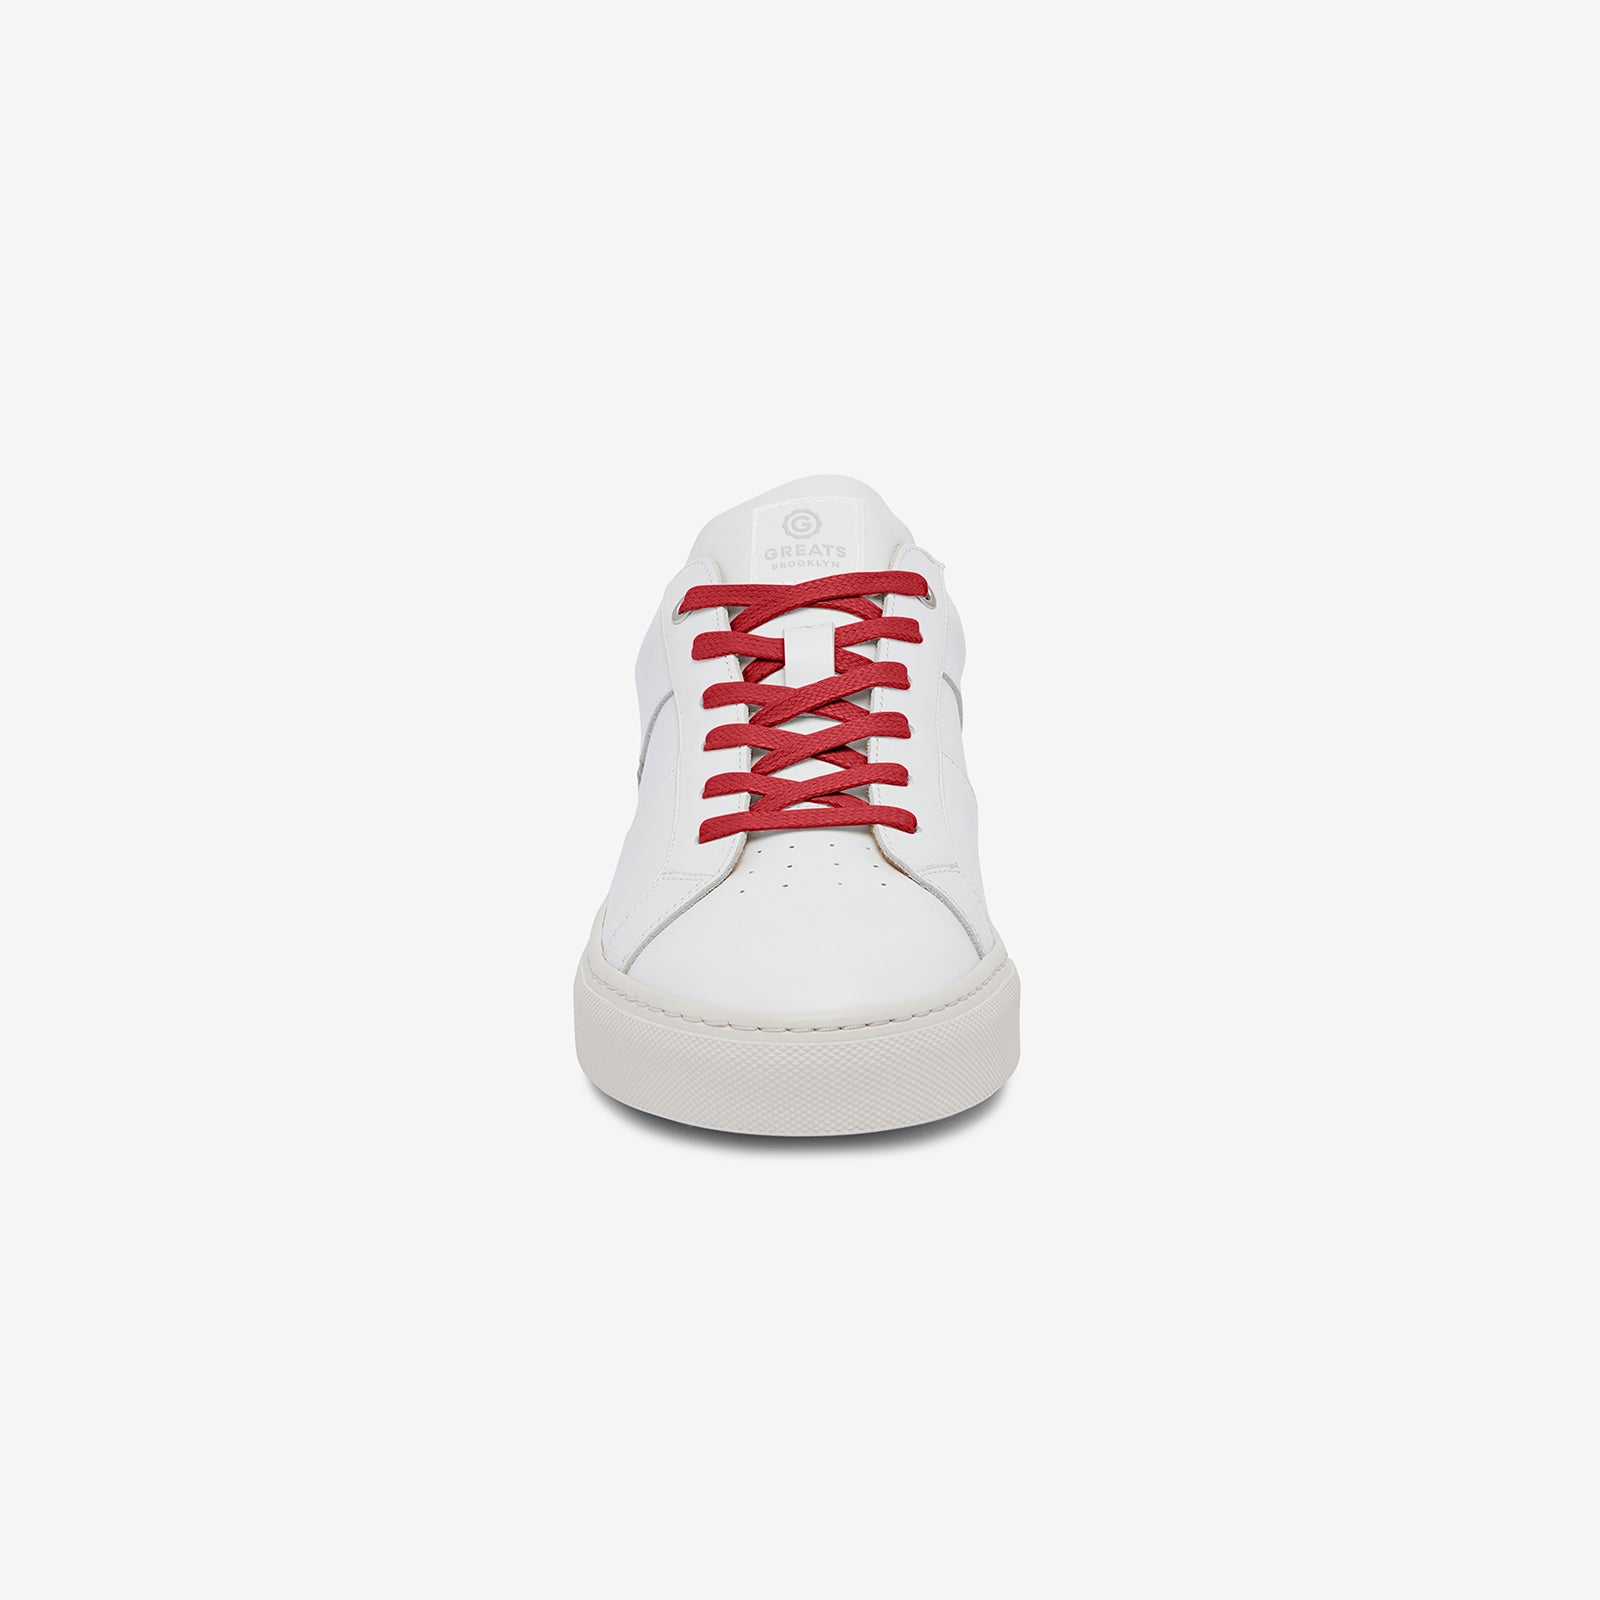 GREATS Premium Shoelaces - Red